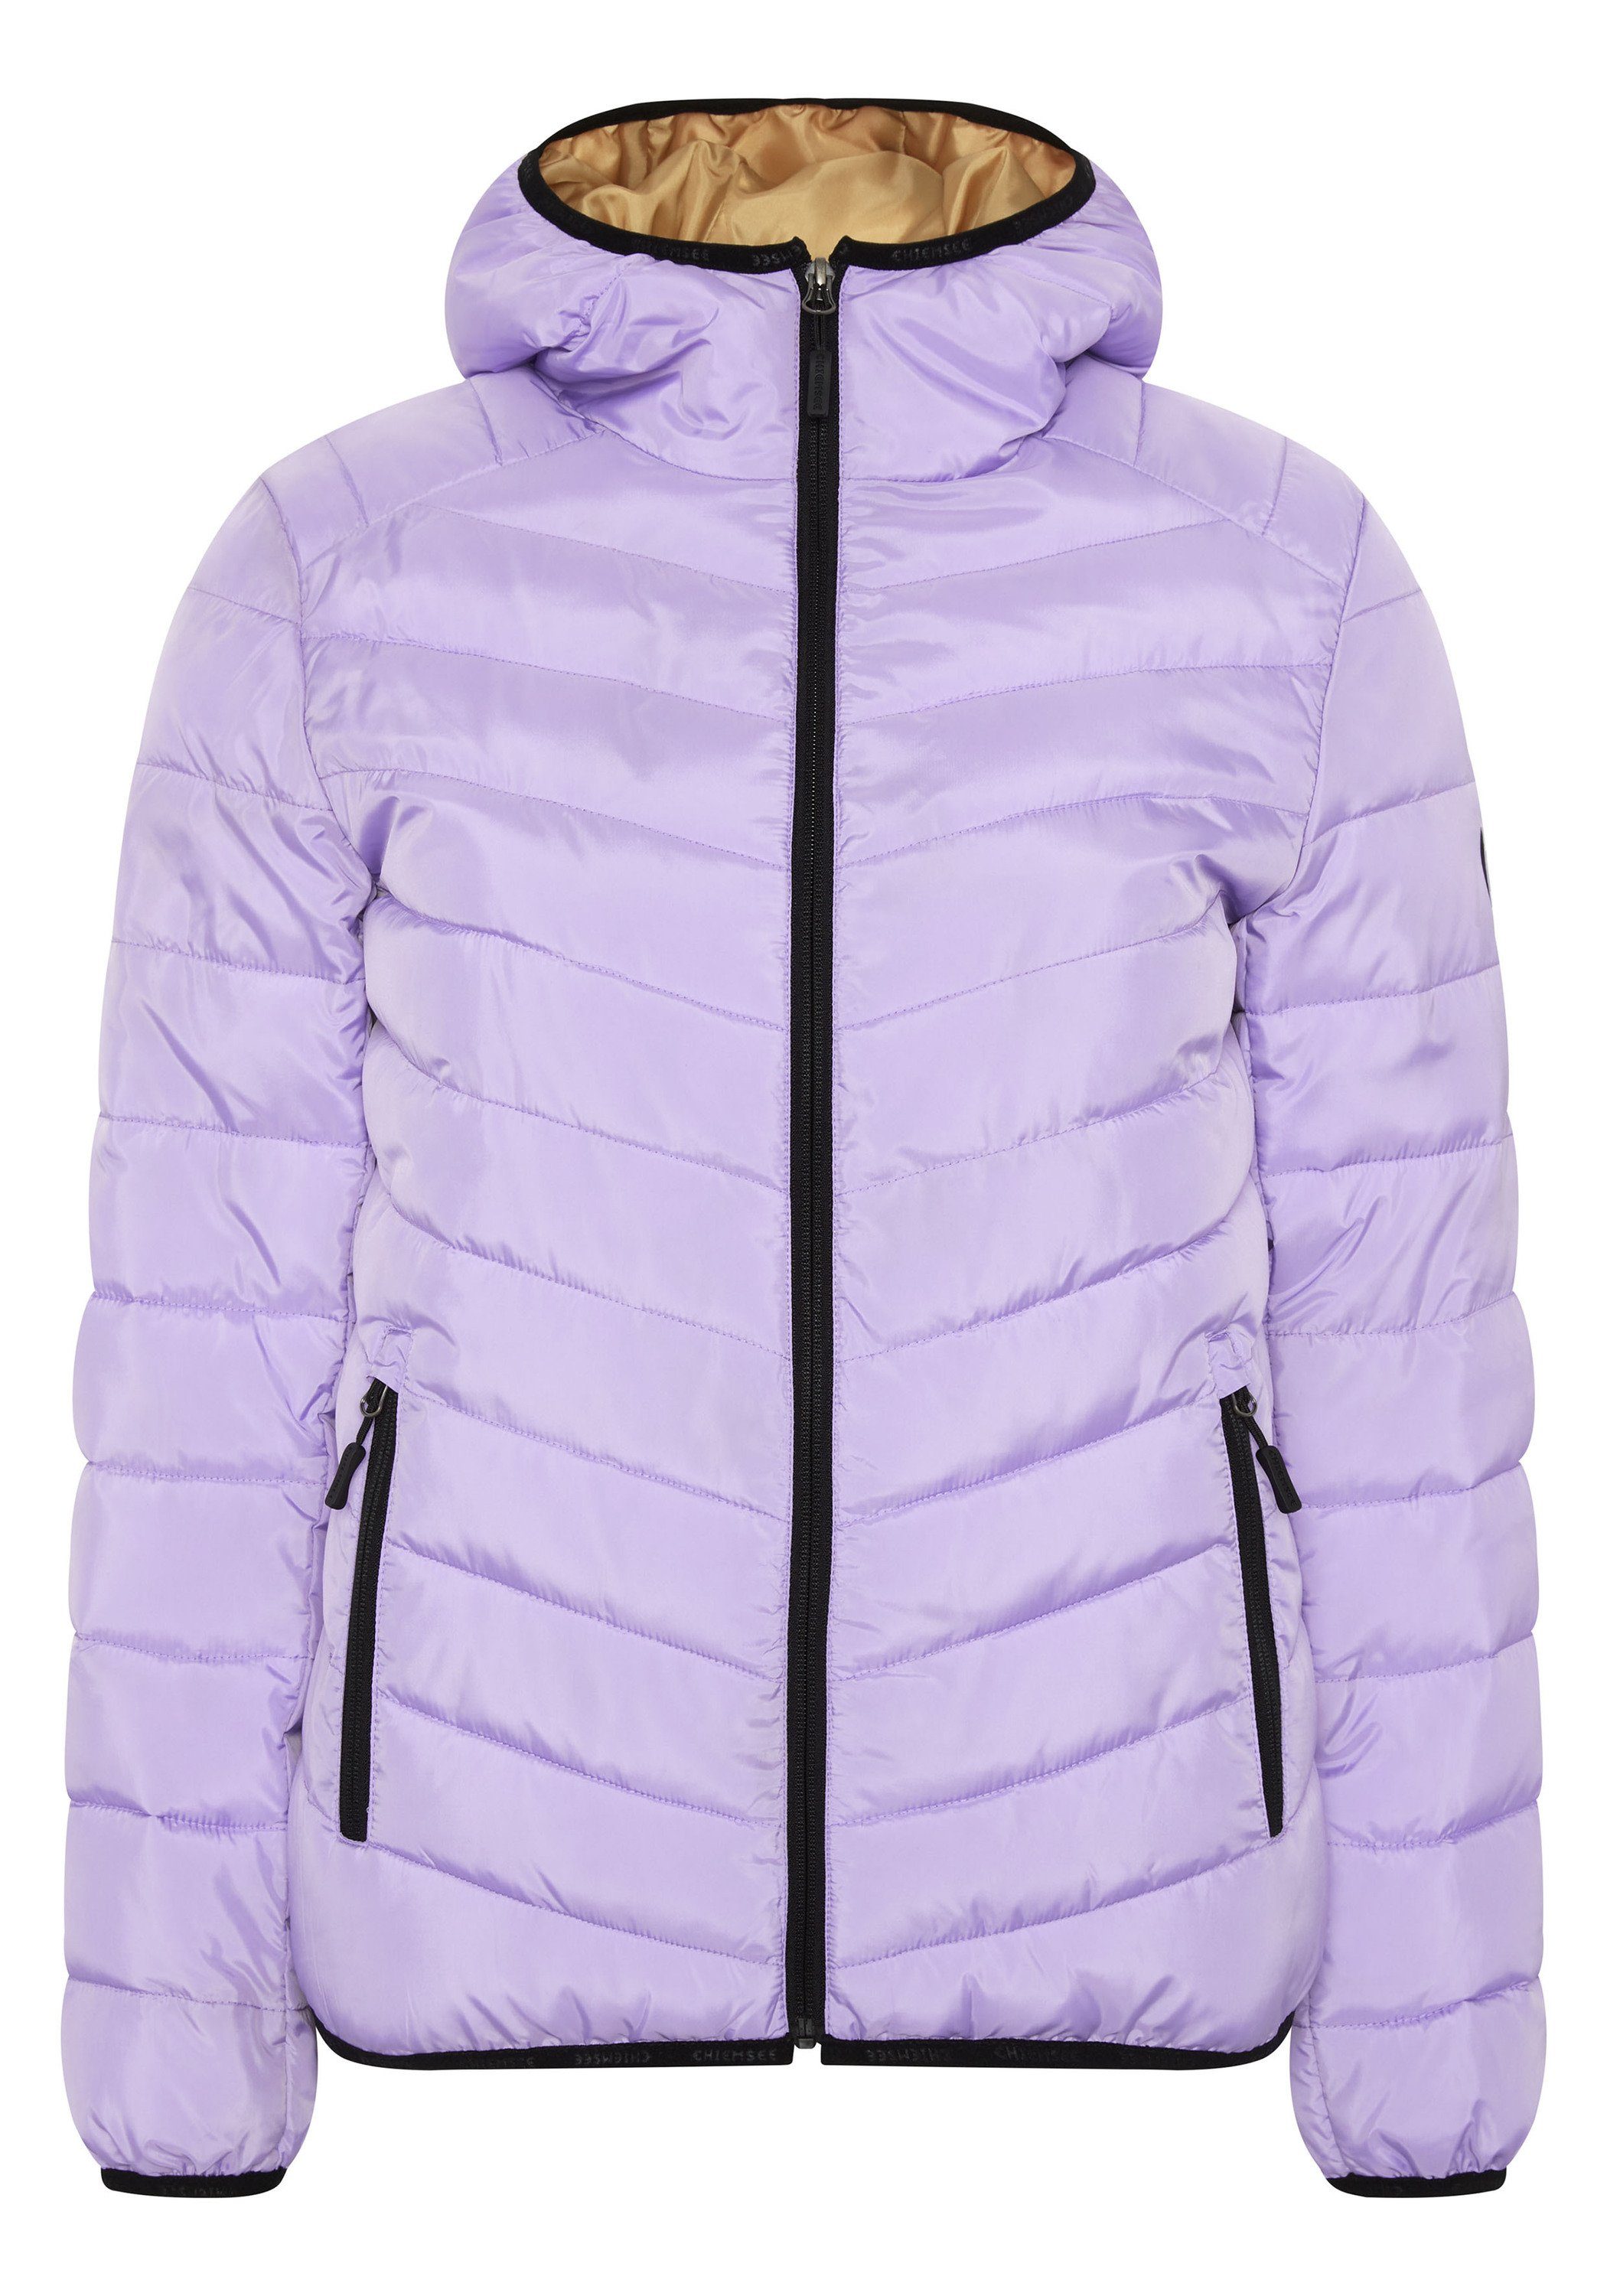 zeigen Sie anmutige Würde Chiemsee Outdoorjacke Wattierte Rose 1 Jacke in 15-3716 Purple moderner Stepp-Optik